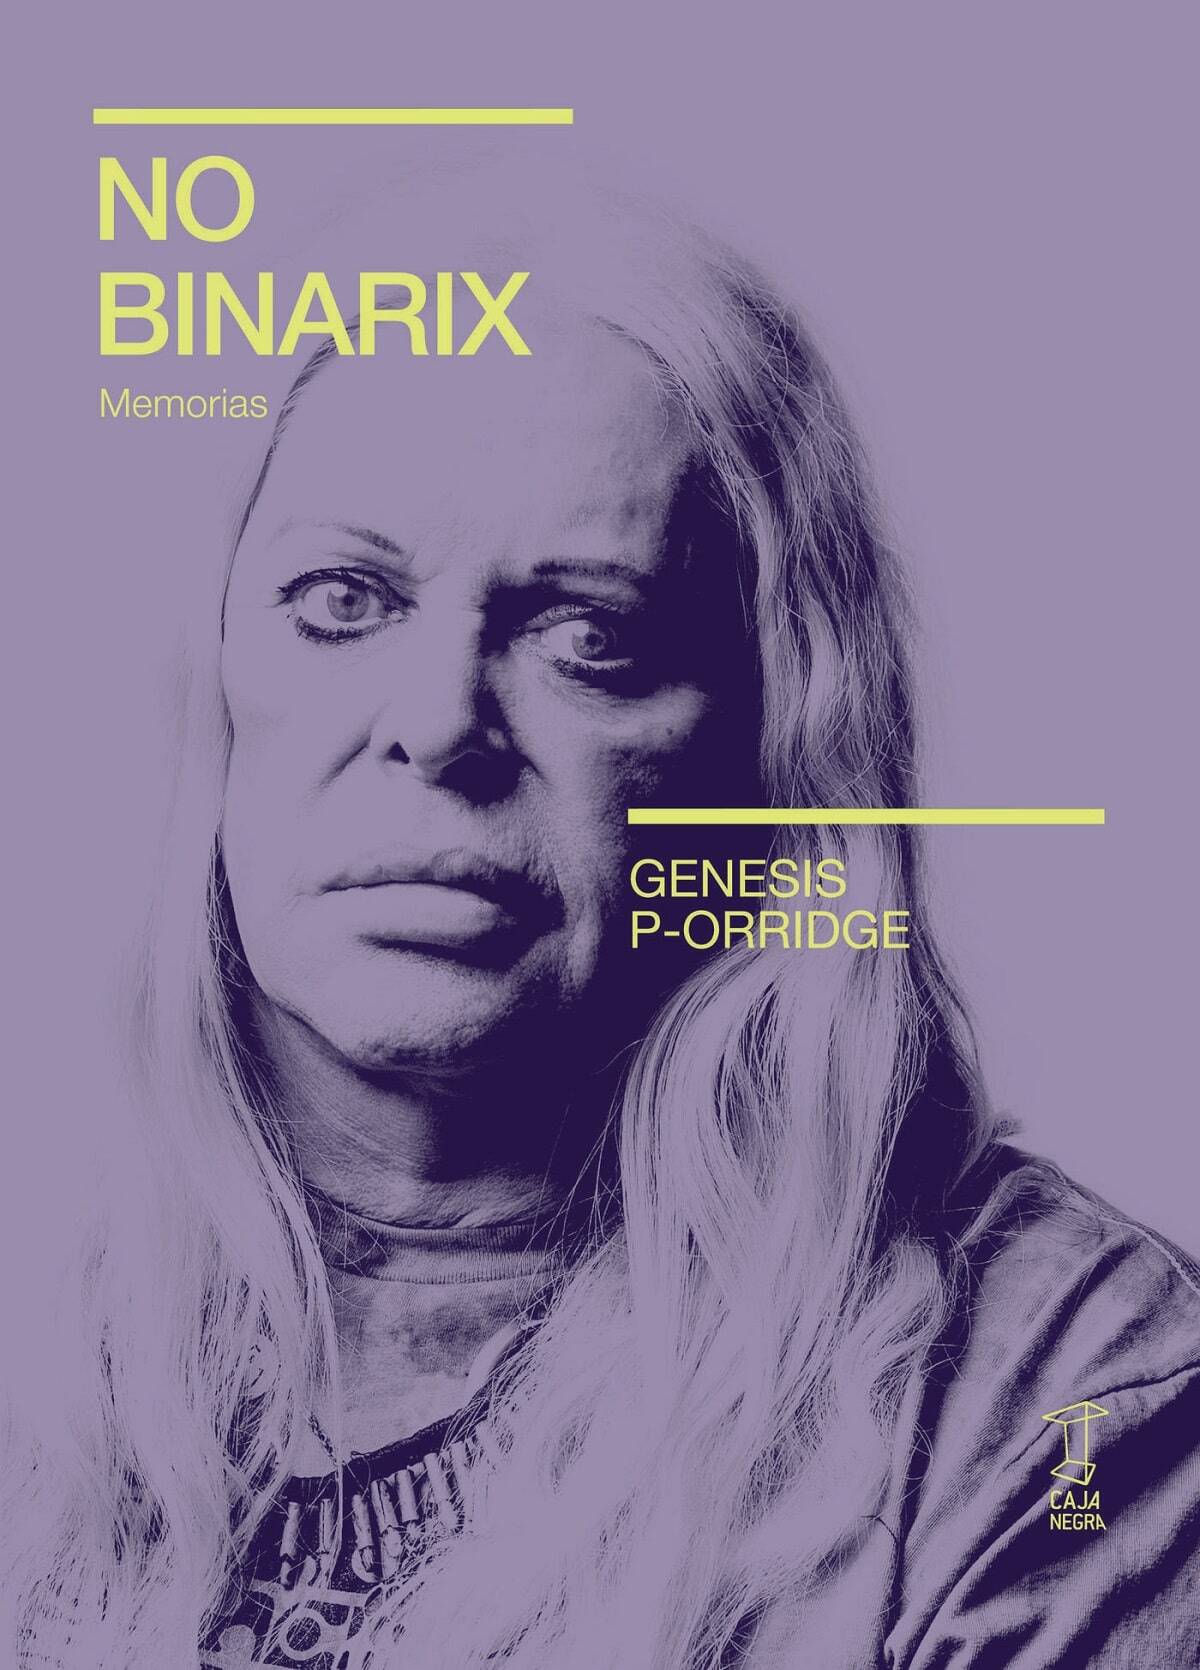 No binarix, memorias de Genesis P-Orridge